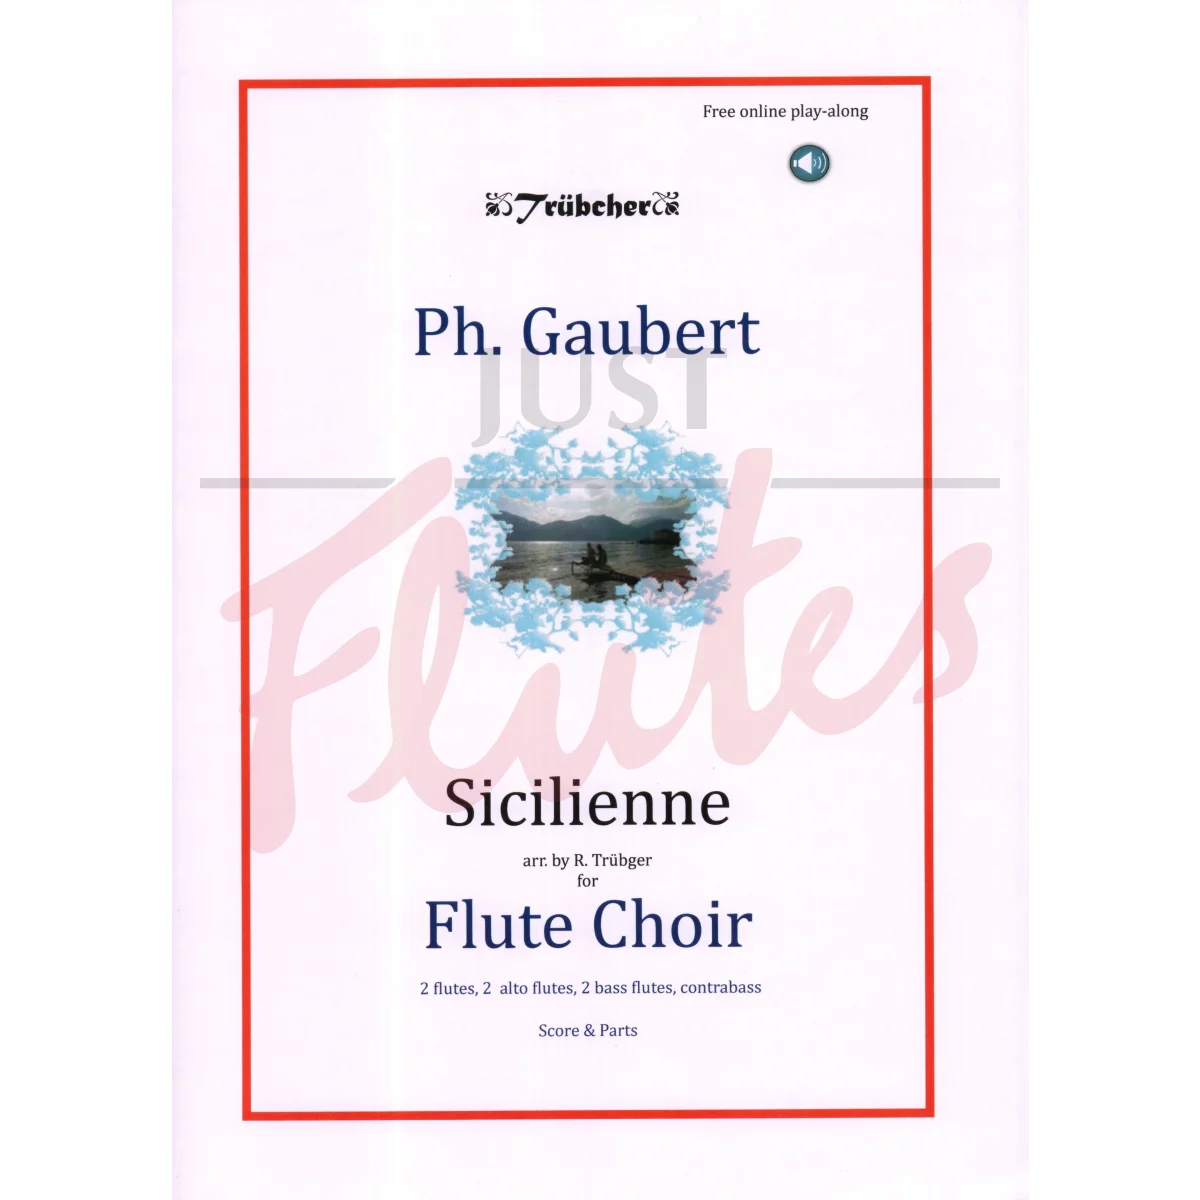 Sicilienne for Flute Choir